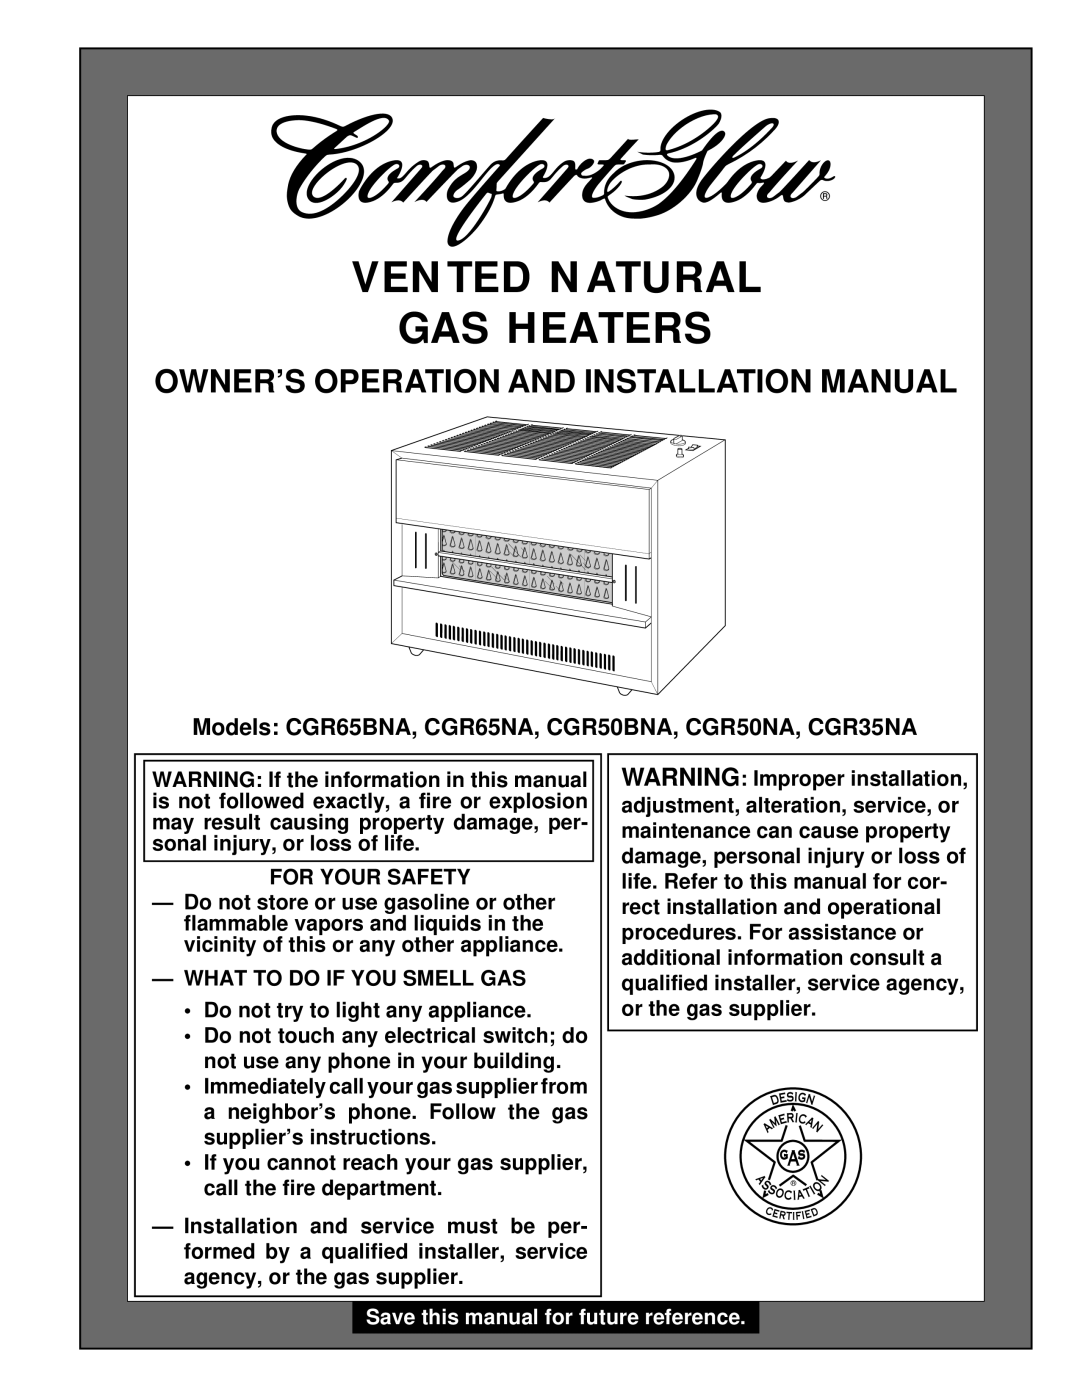 Desa CGR65NA, CGR35NA, CGR50BNA installation manual Owner’S Operation And Installation Manual, Vented Natural Gas Heaters 